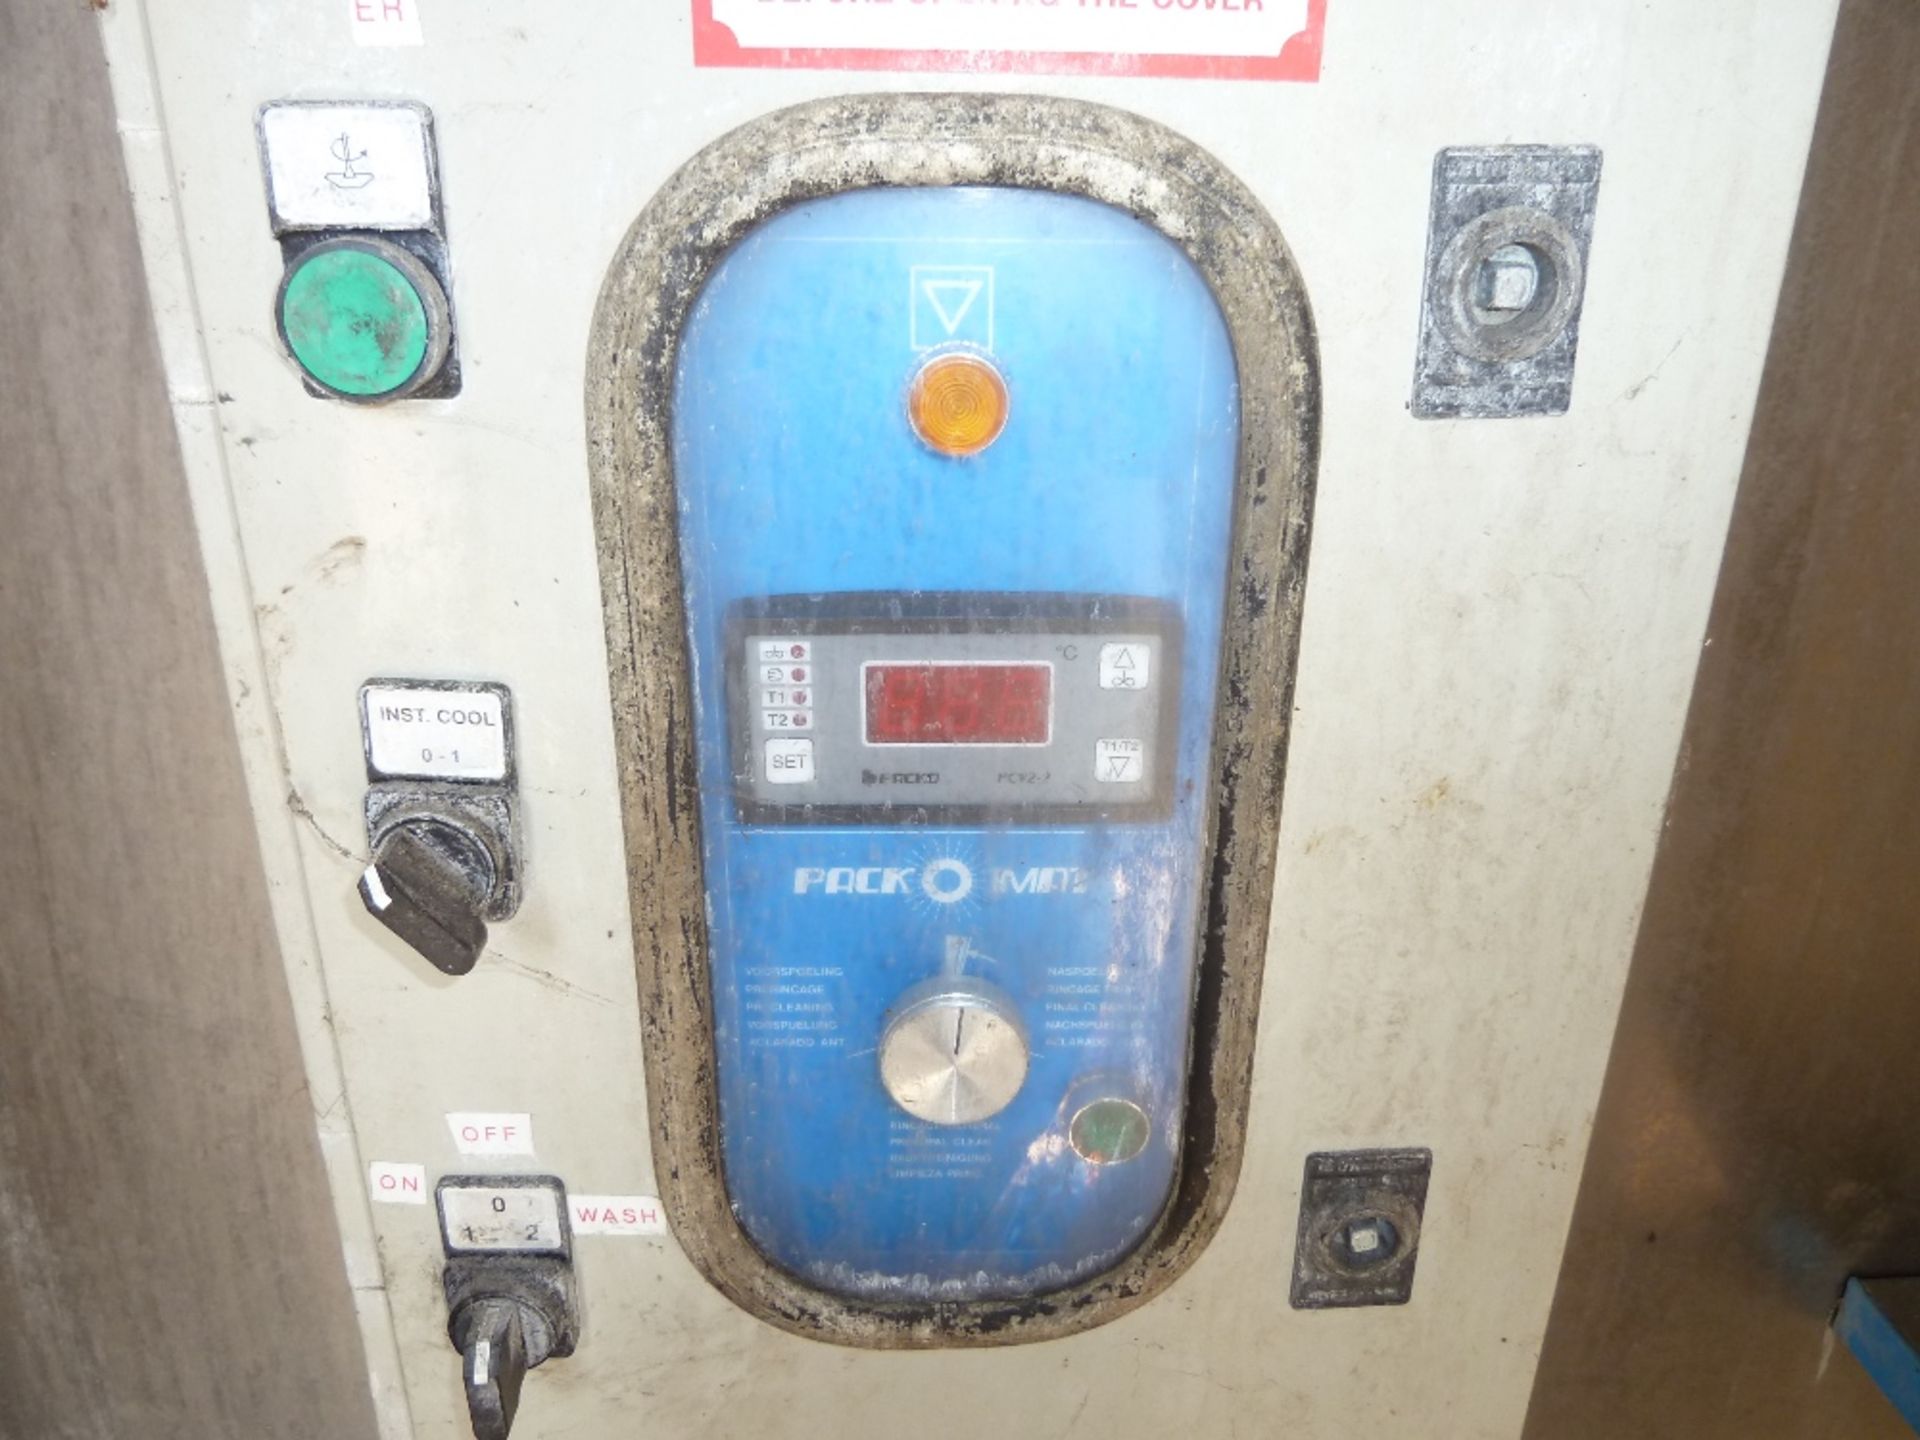 Fullwood bulk milk tank, 7,200L, serial 26561 with packomat control panel. - Image 4 of 5